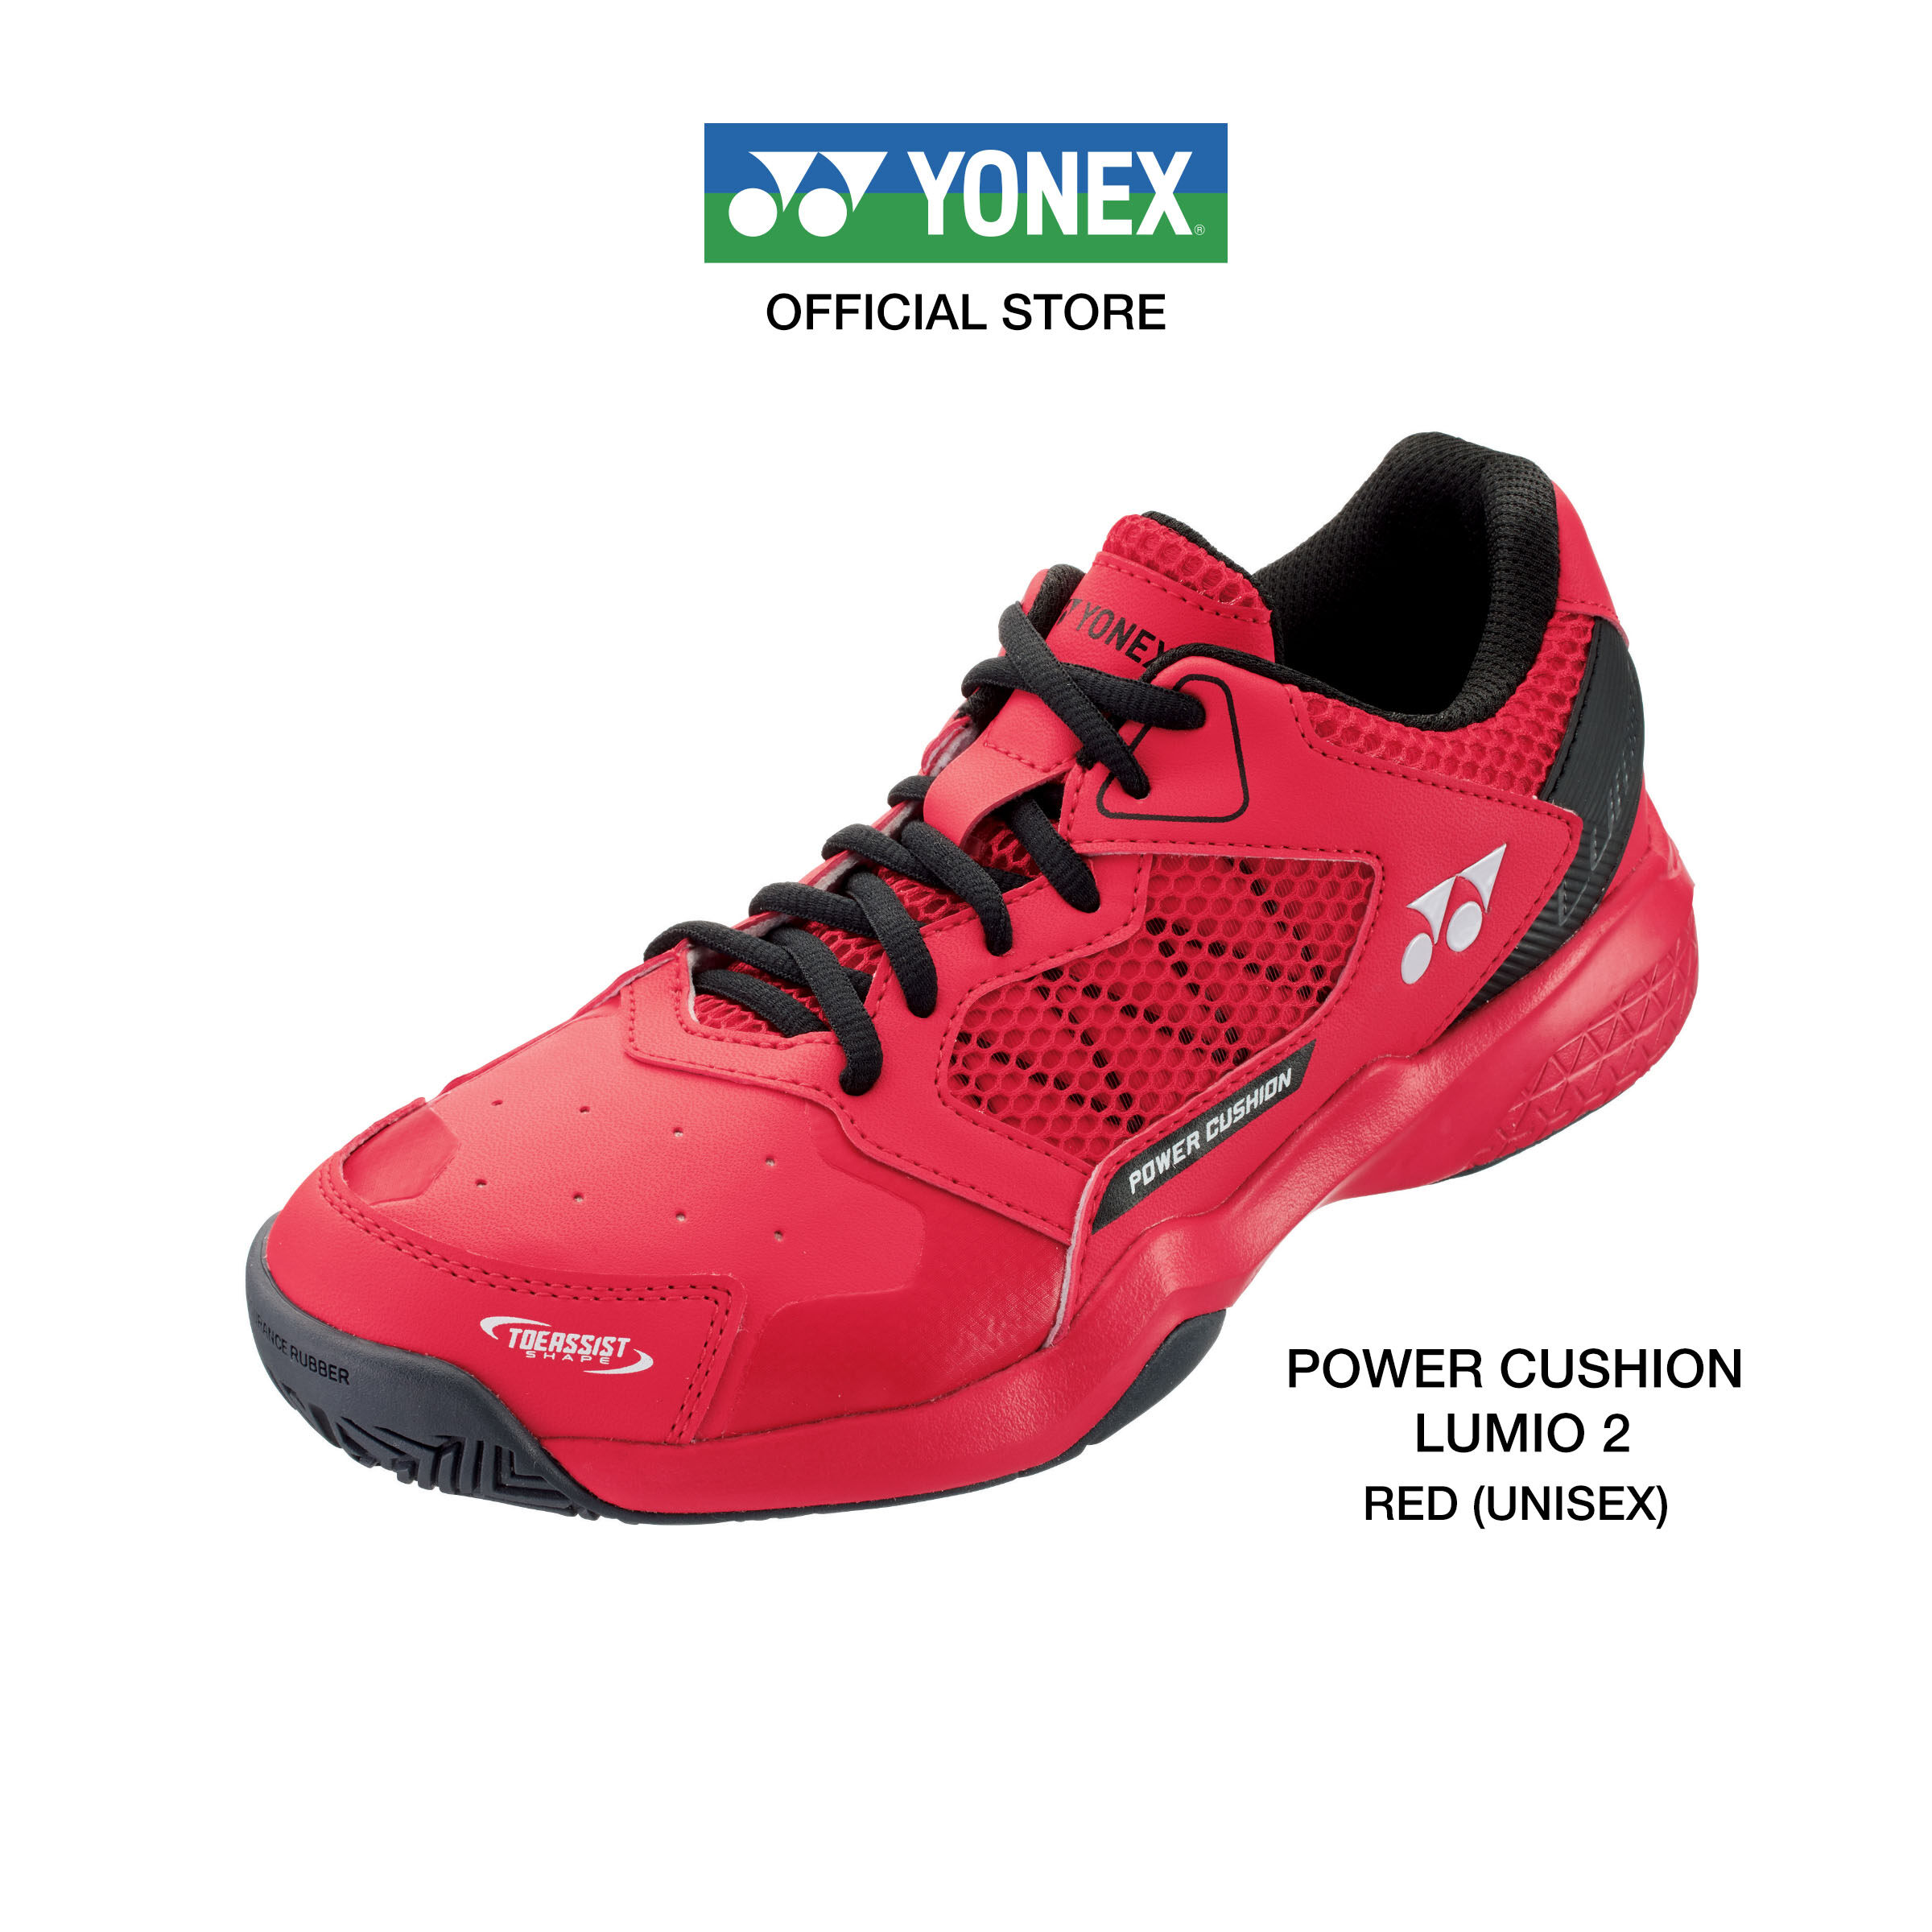 (SIZE US MEN) รองเท้าเทนนิส YONEX รุ่น POWER CUSHION LUMIO 2 : ALL-COURT  (SHTLU2)  รองเท้าสำหรับผู้เริ่มต้นเล่นเทนนิสและมองหารองเท้าราคาประหยัดในช่วงเริ่มต้น